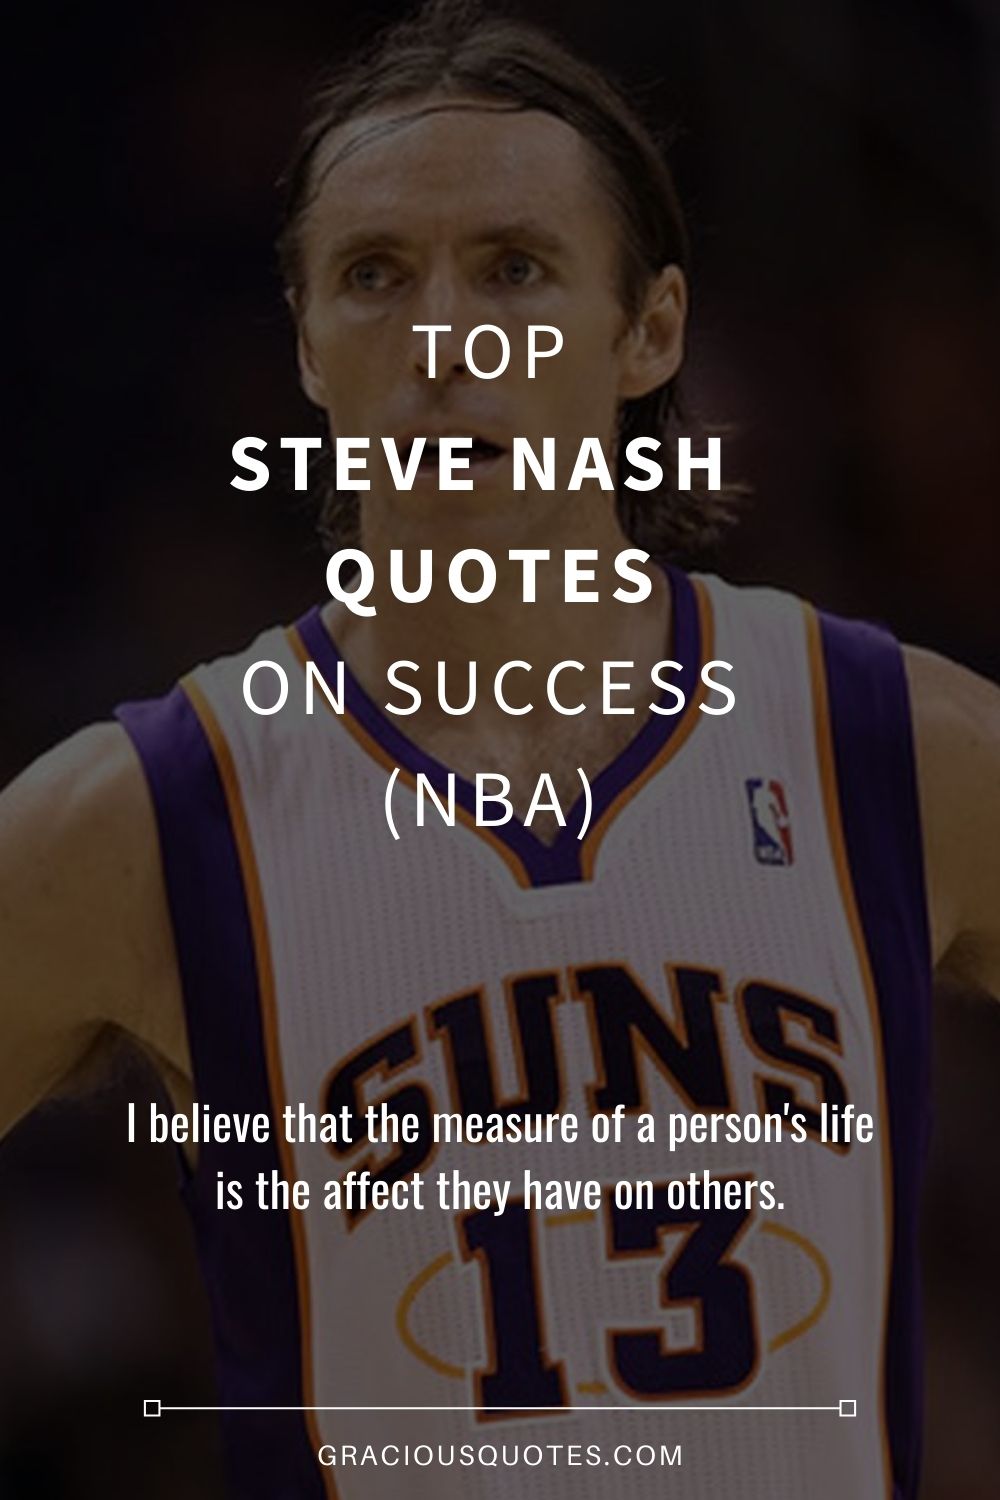 Top Steve Nash Quotes on Success (NBA) - Gracious Quotes